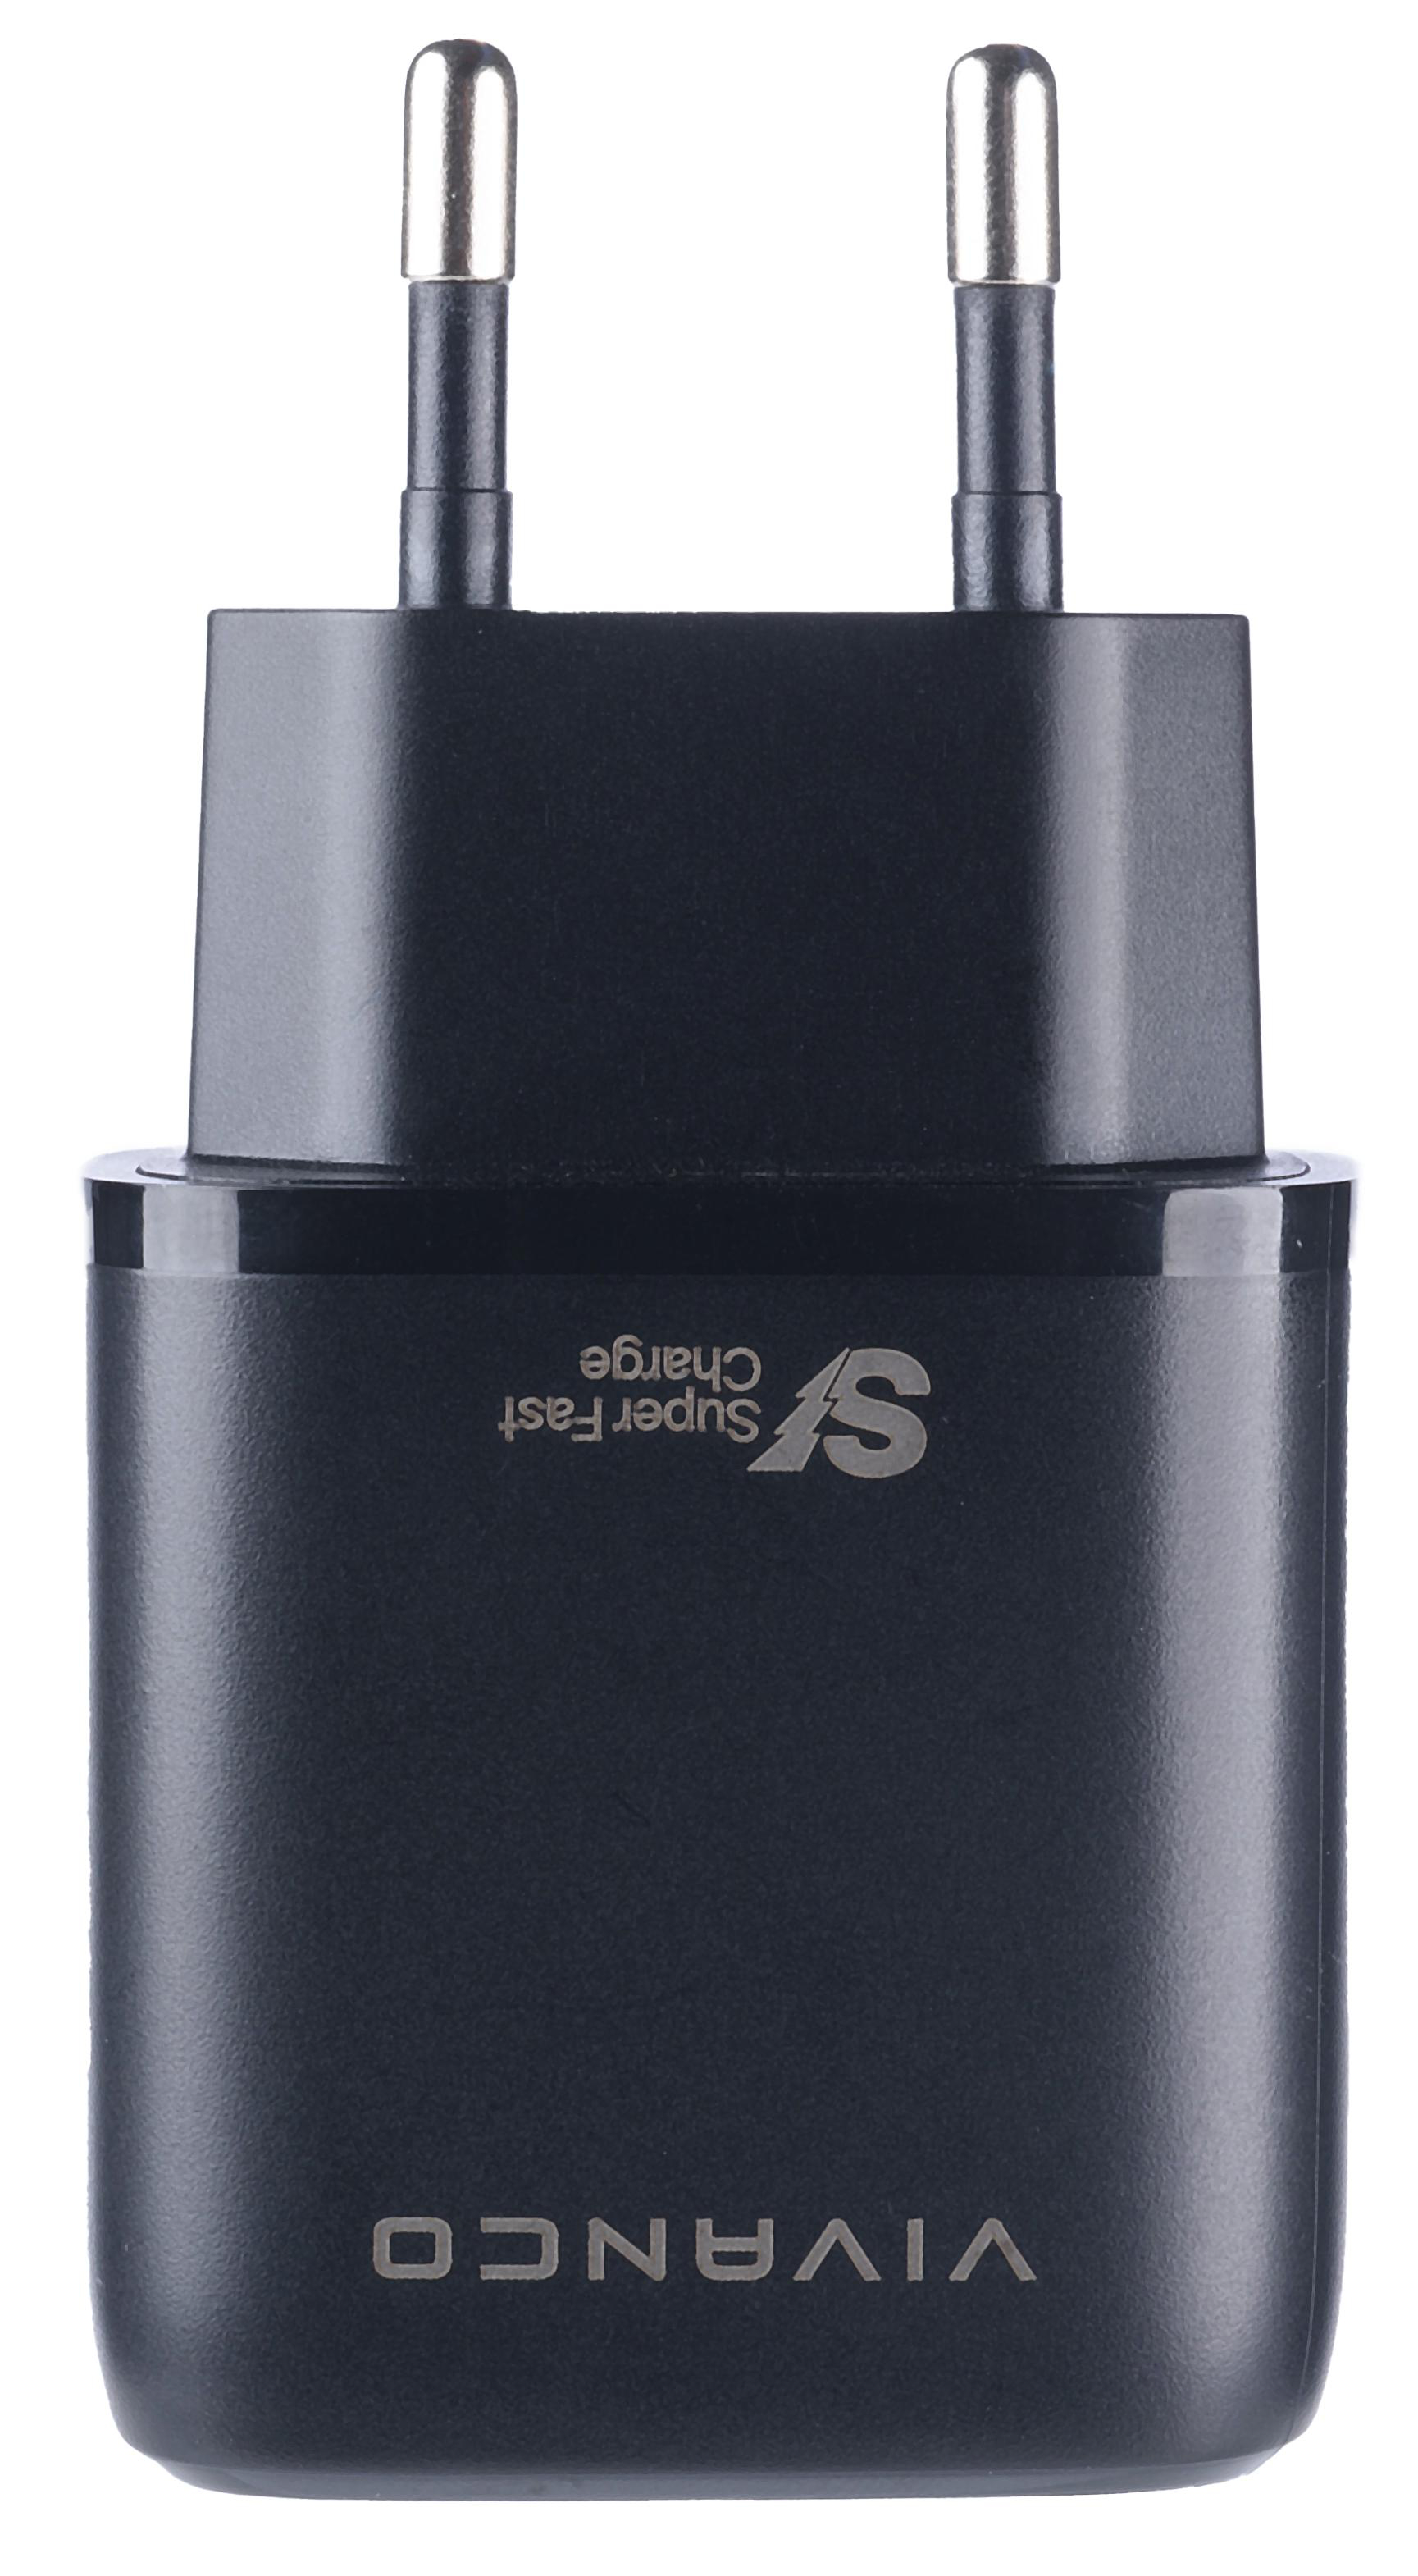 Charger USB Schwarz Fast Type-C™ Samsung, Ladegerät VIVANCO Super